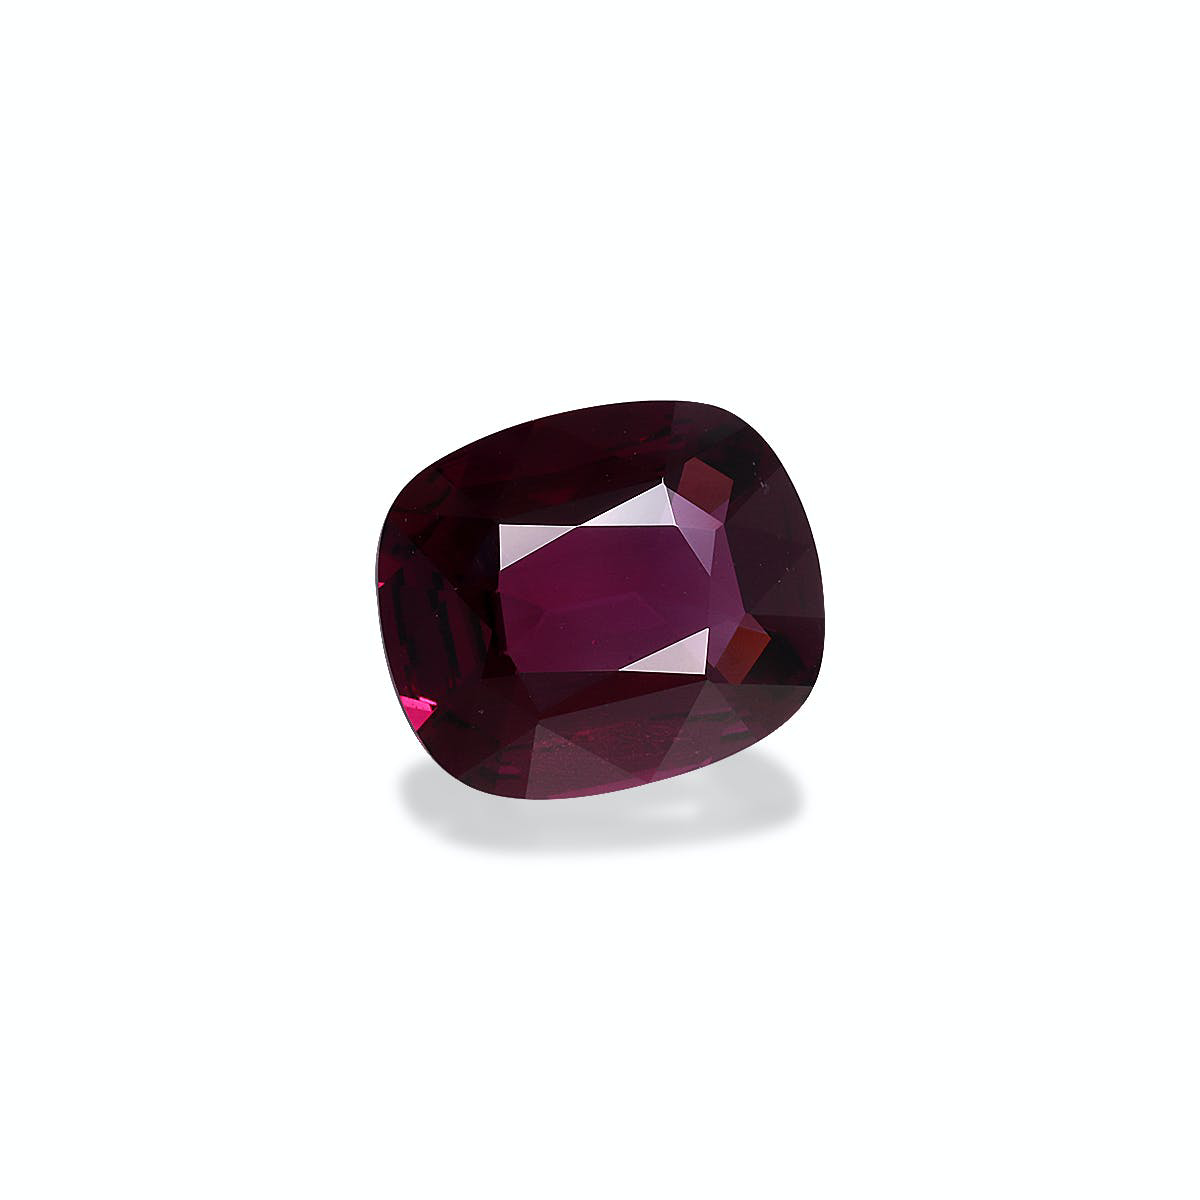 Picture of Magenta Purple Umbalite Garnet 6.11ct - 13x11mm (RD0285)